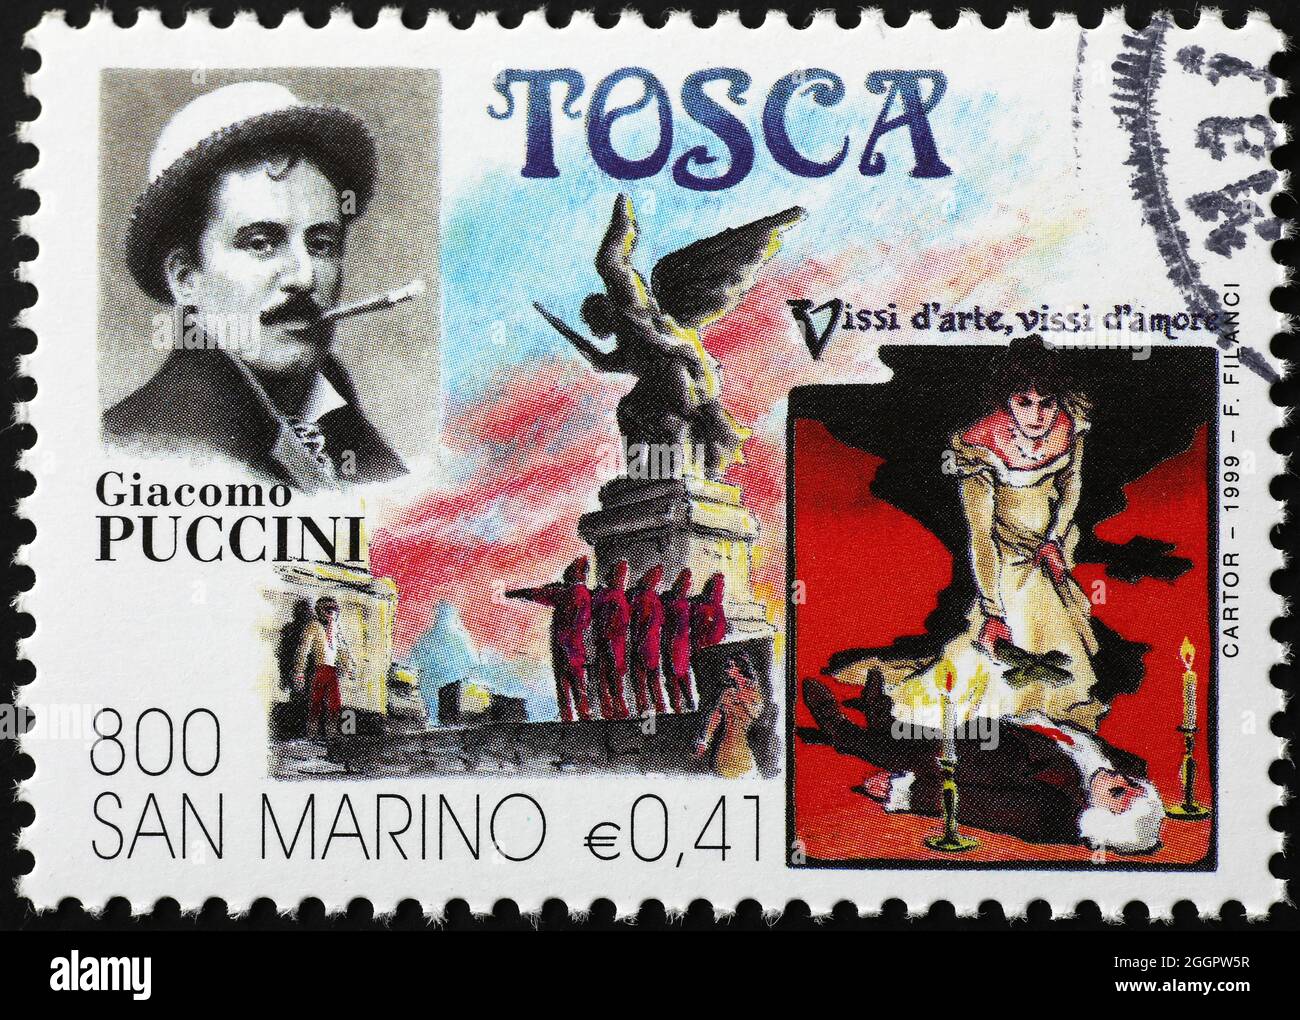 Giacomo Puccini und seine Oper Tosca auf Briefmarke Stockfoto